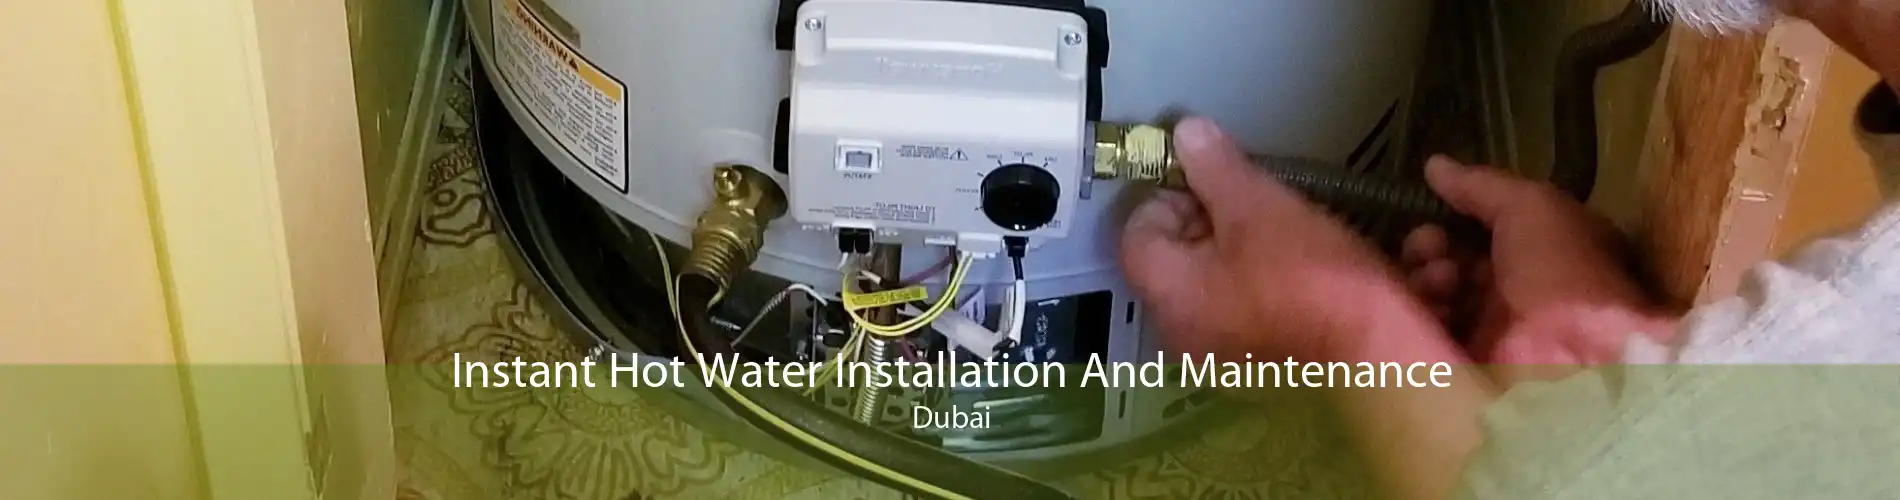 Instant Hot Water Installation And Maintenance Dubai